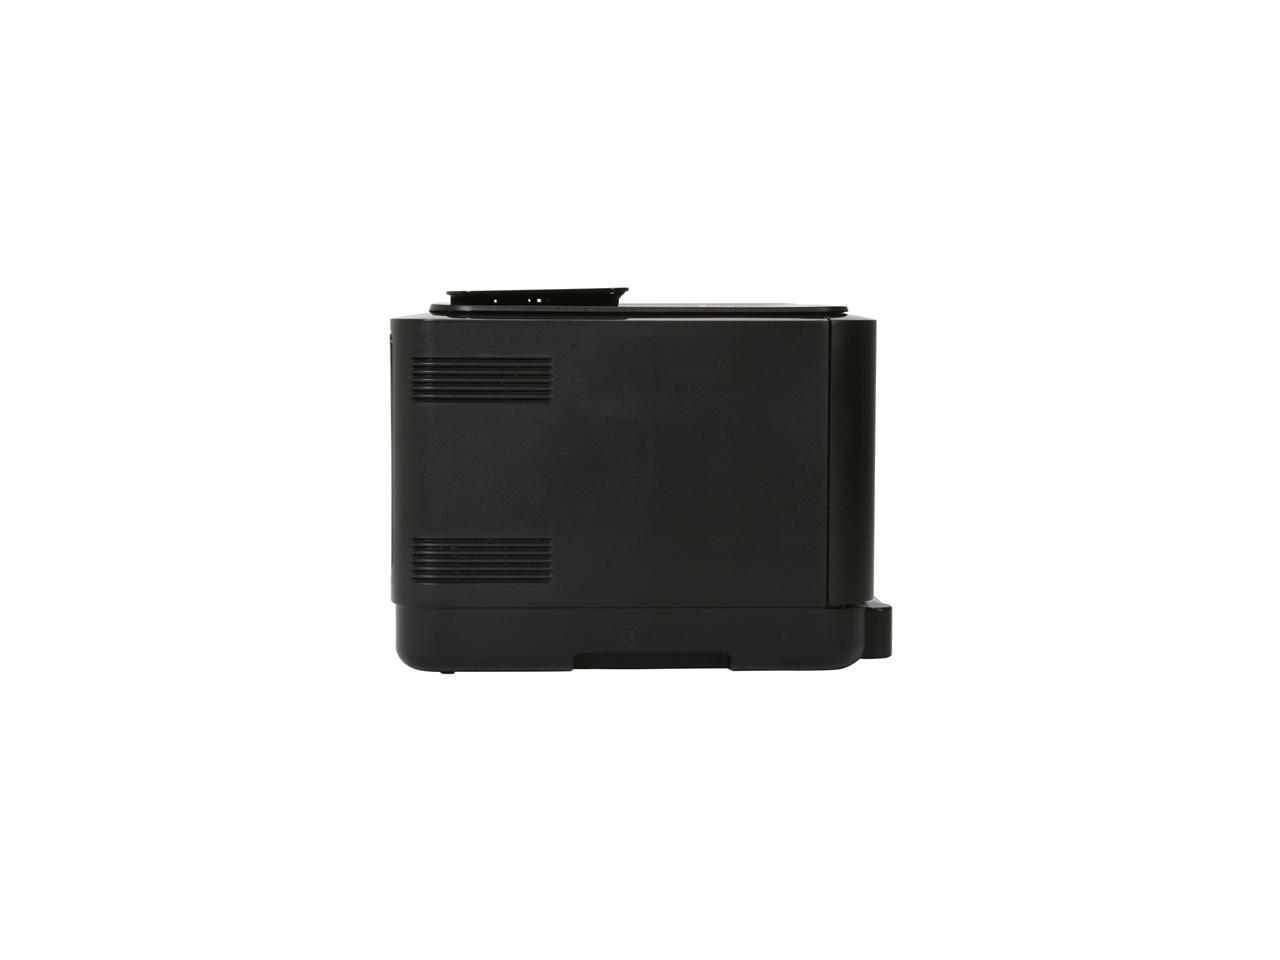 Samsung CLP-315/XAA Personal Color Laser Printer - Newegg.com